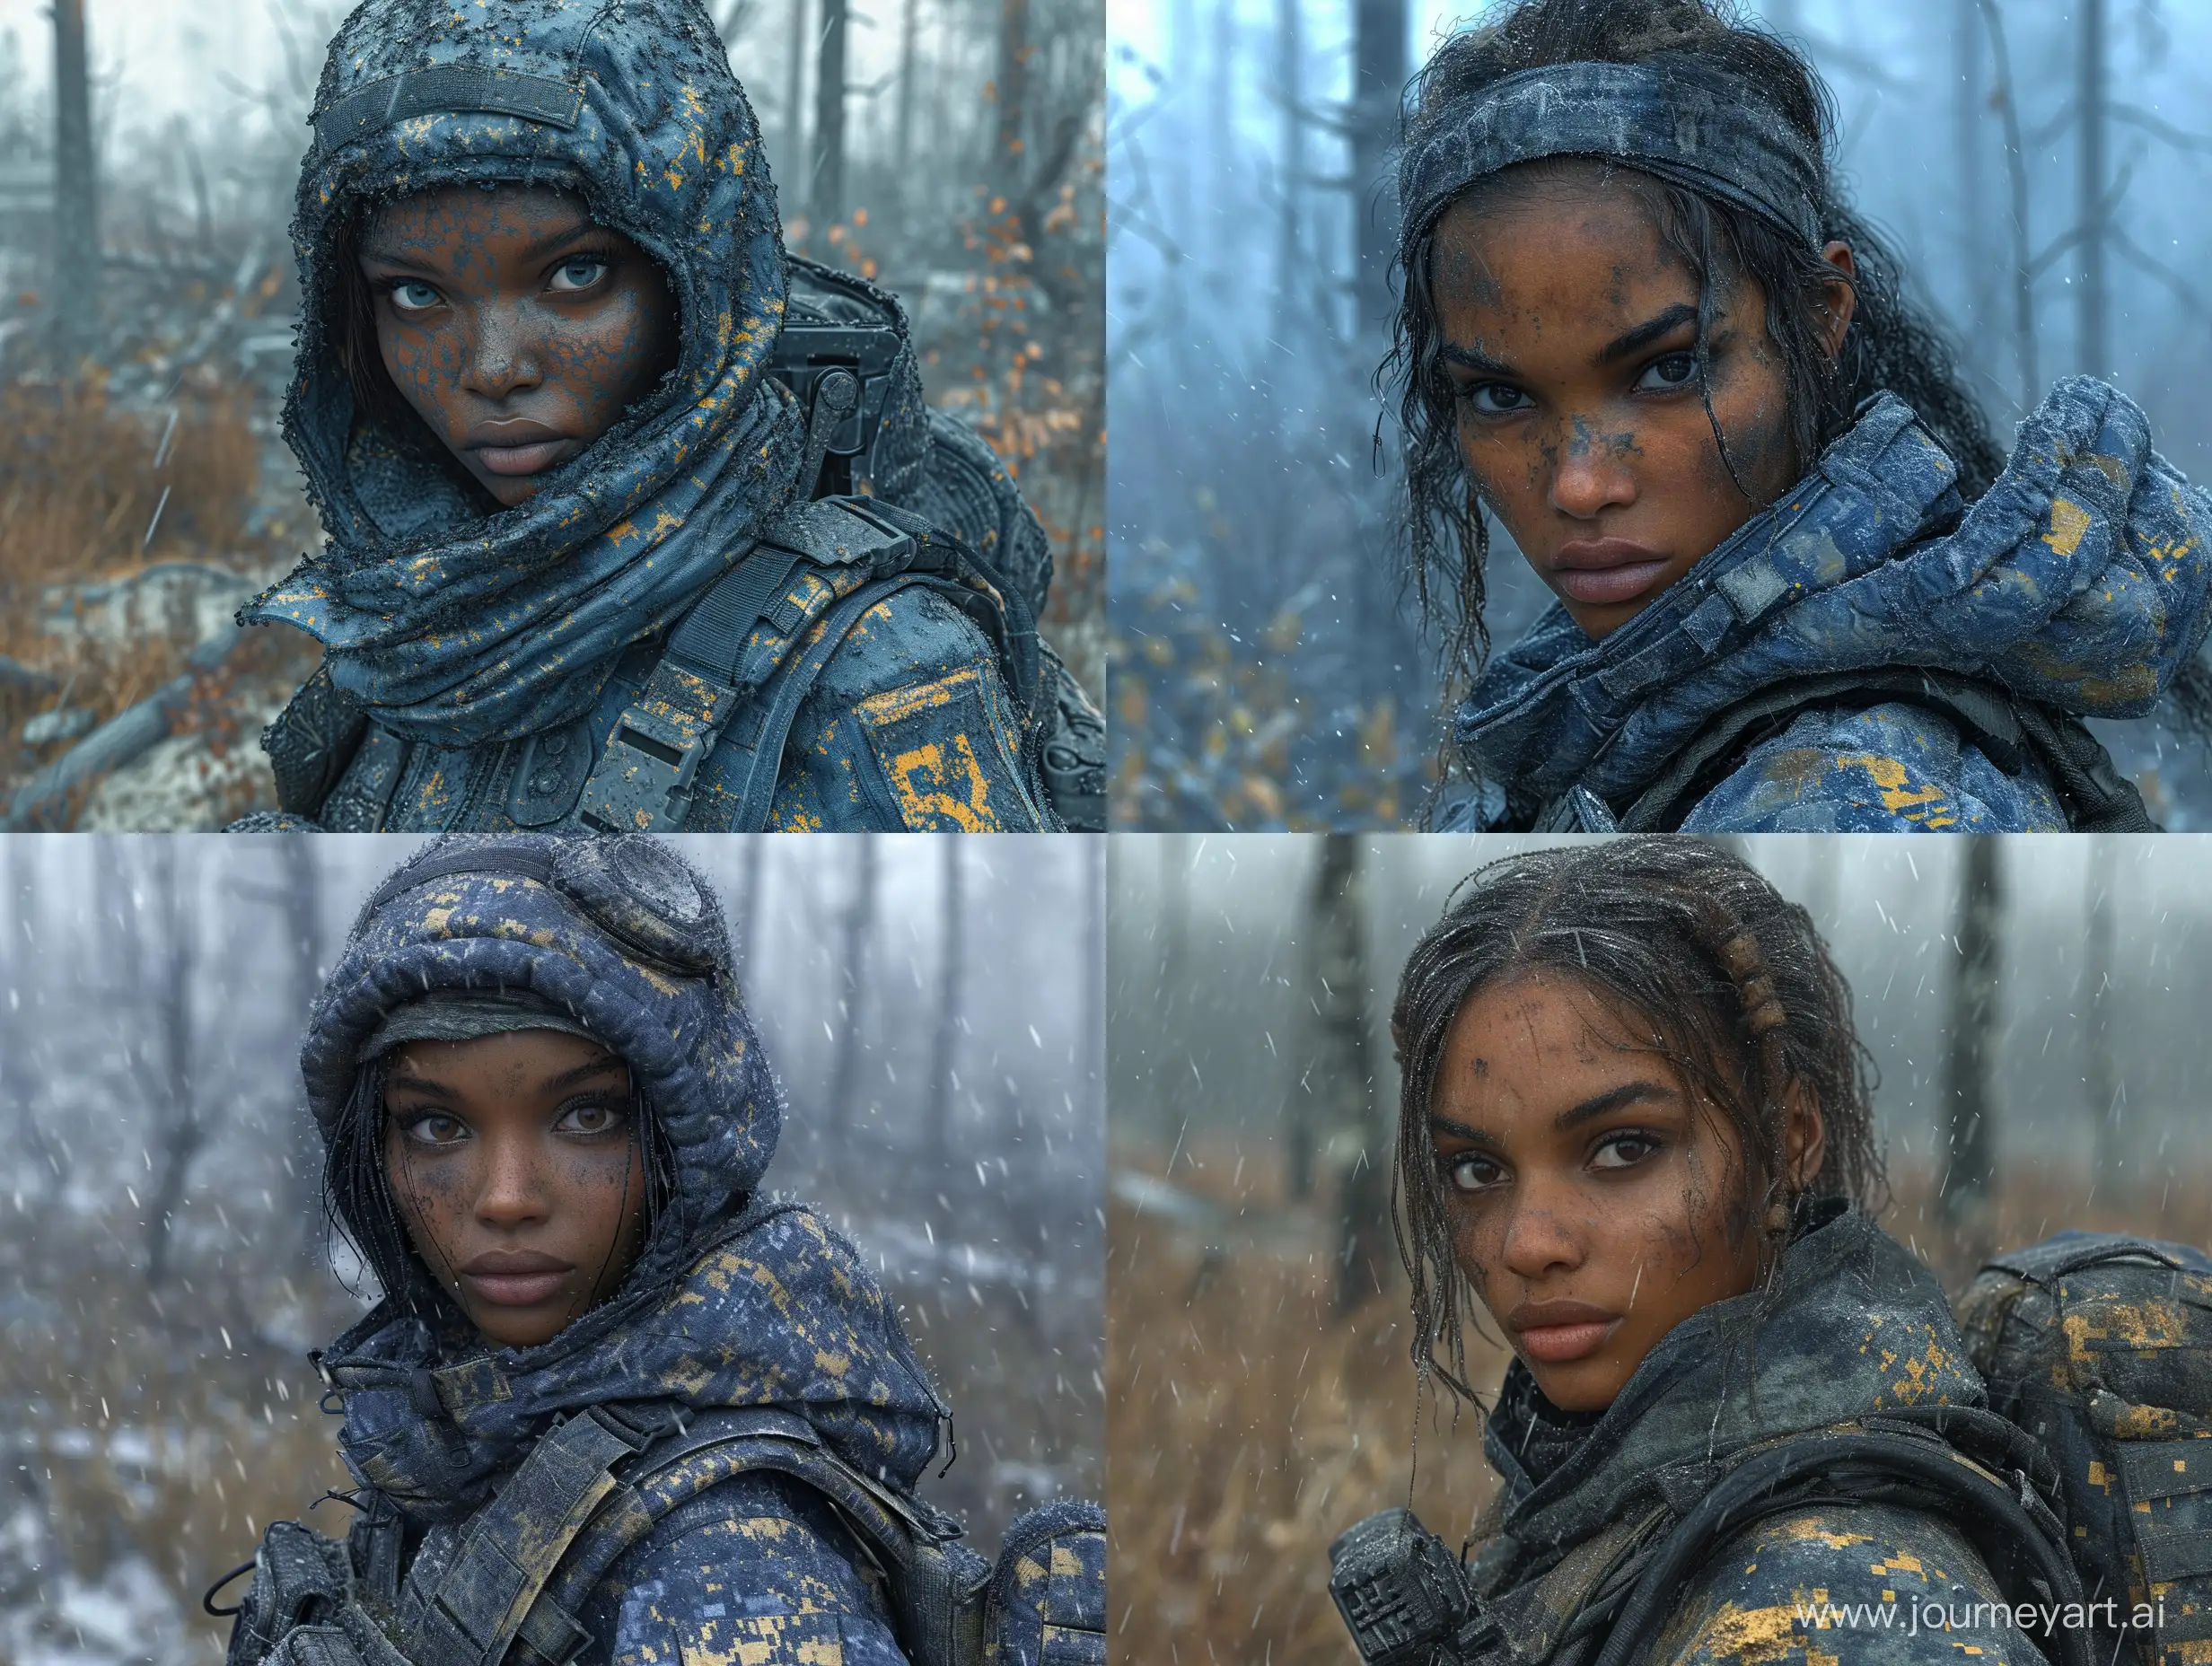 Stunning-Mulatto-Female-Mercenary-in-STALKER-Video-Game